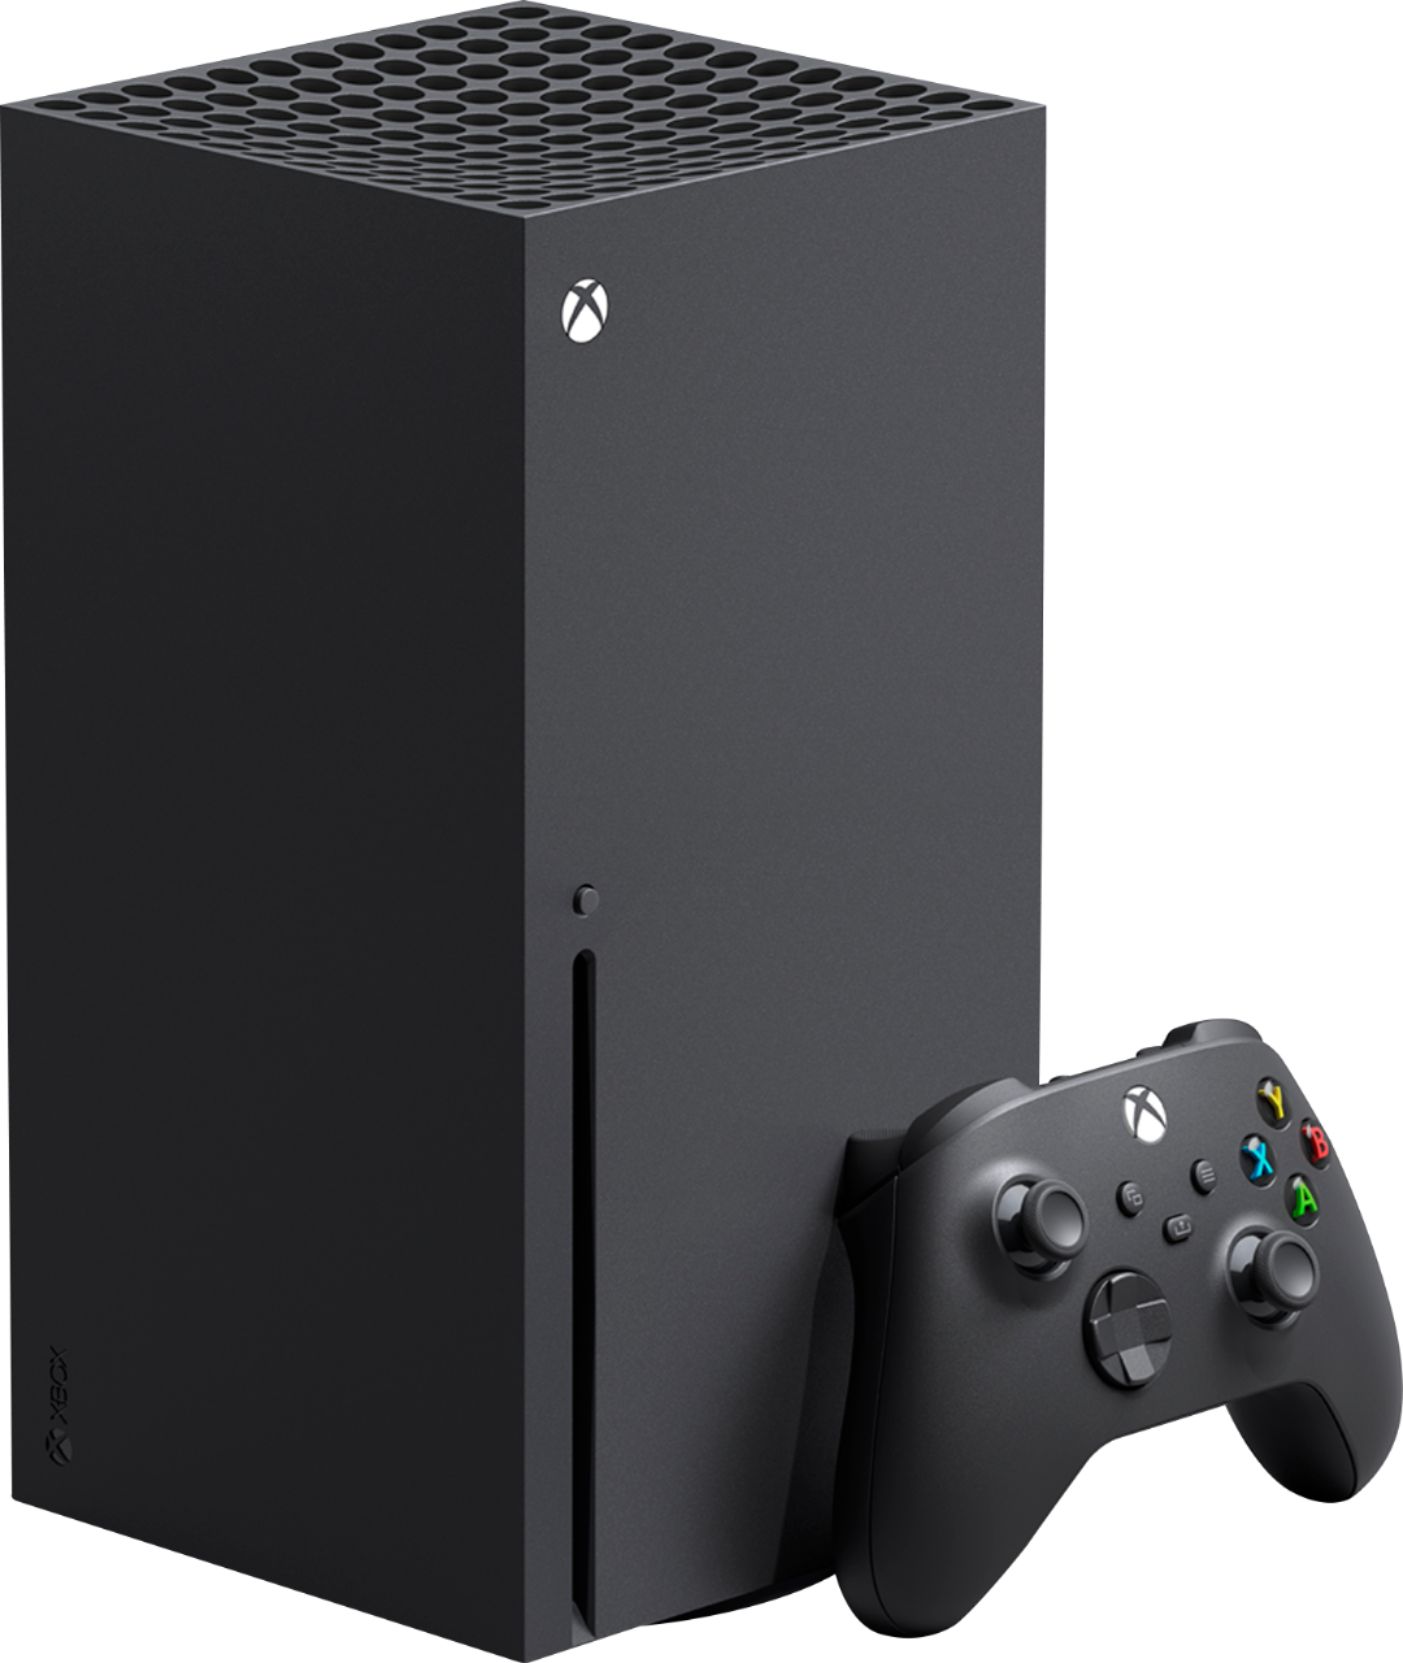 Microsoft Xbox Series X @ Best Buy - $499.99